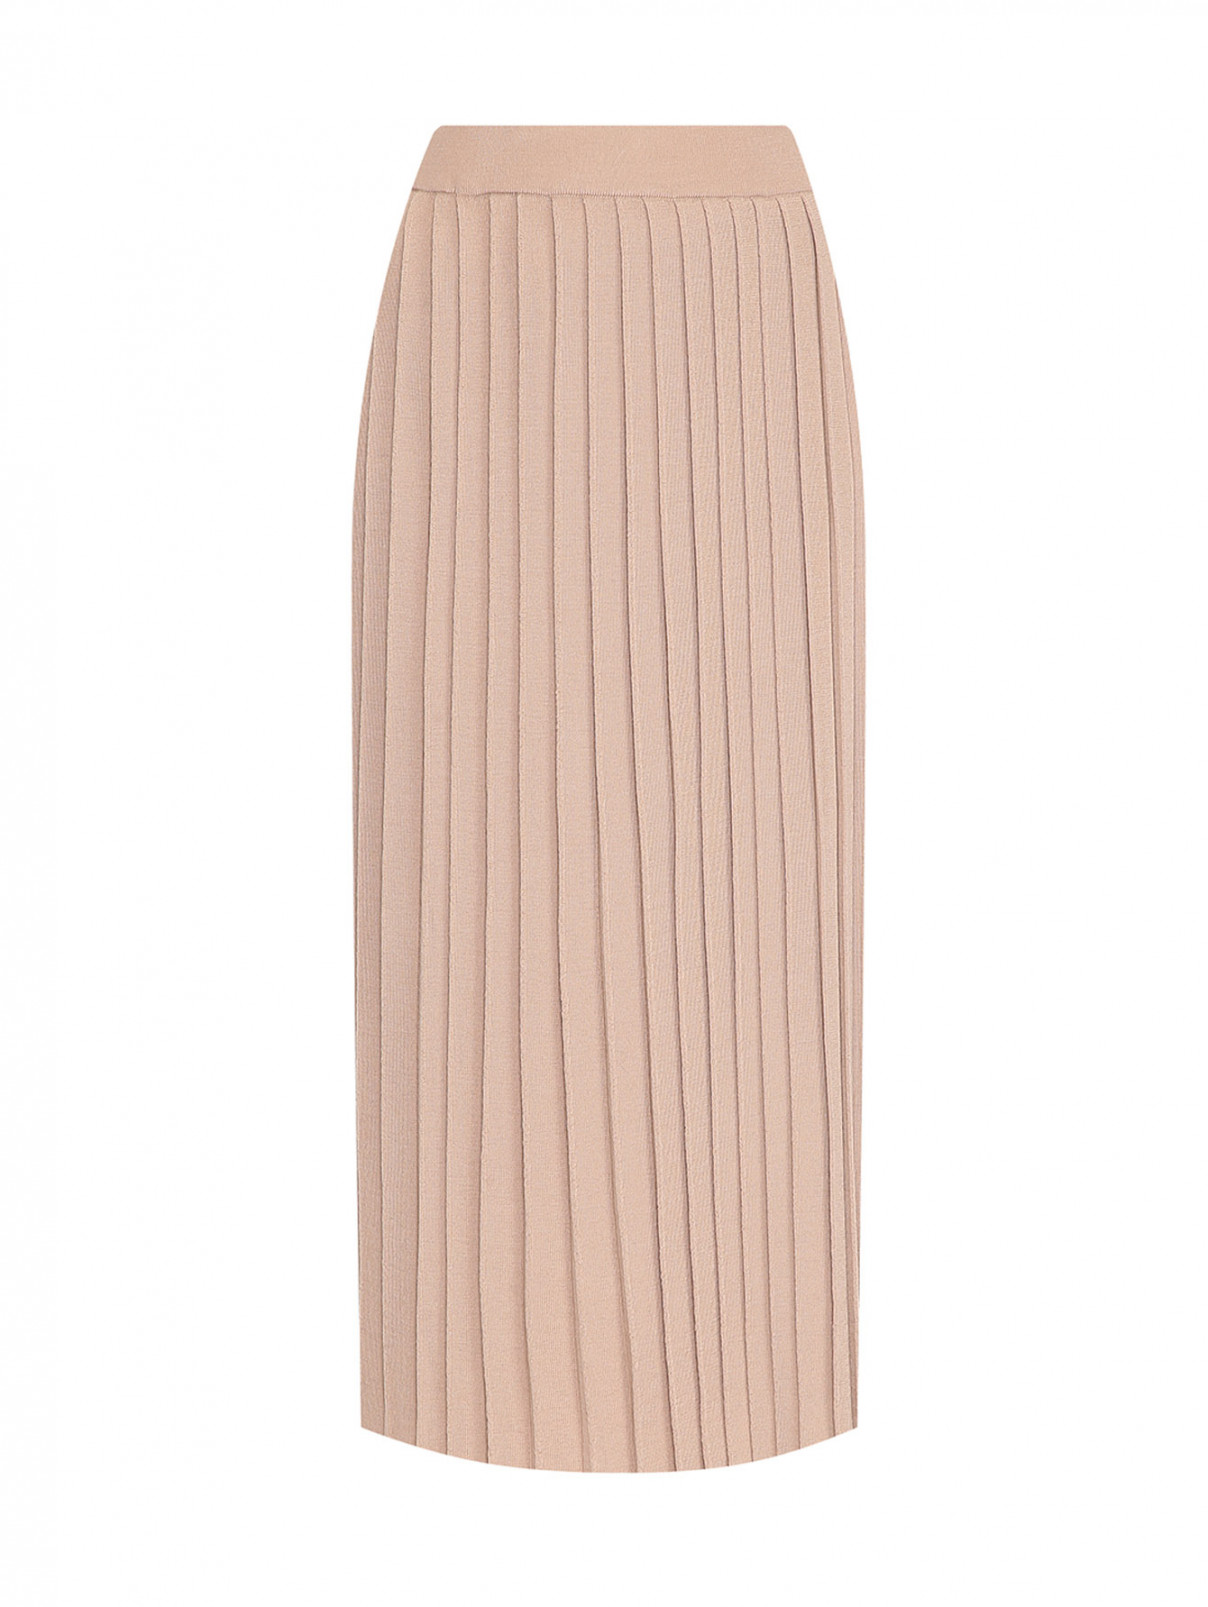 Трикотажная юбка-миди на резинке Weekend Max Mara  –  Общий вид  – Цвет:  Бежевый